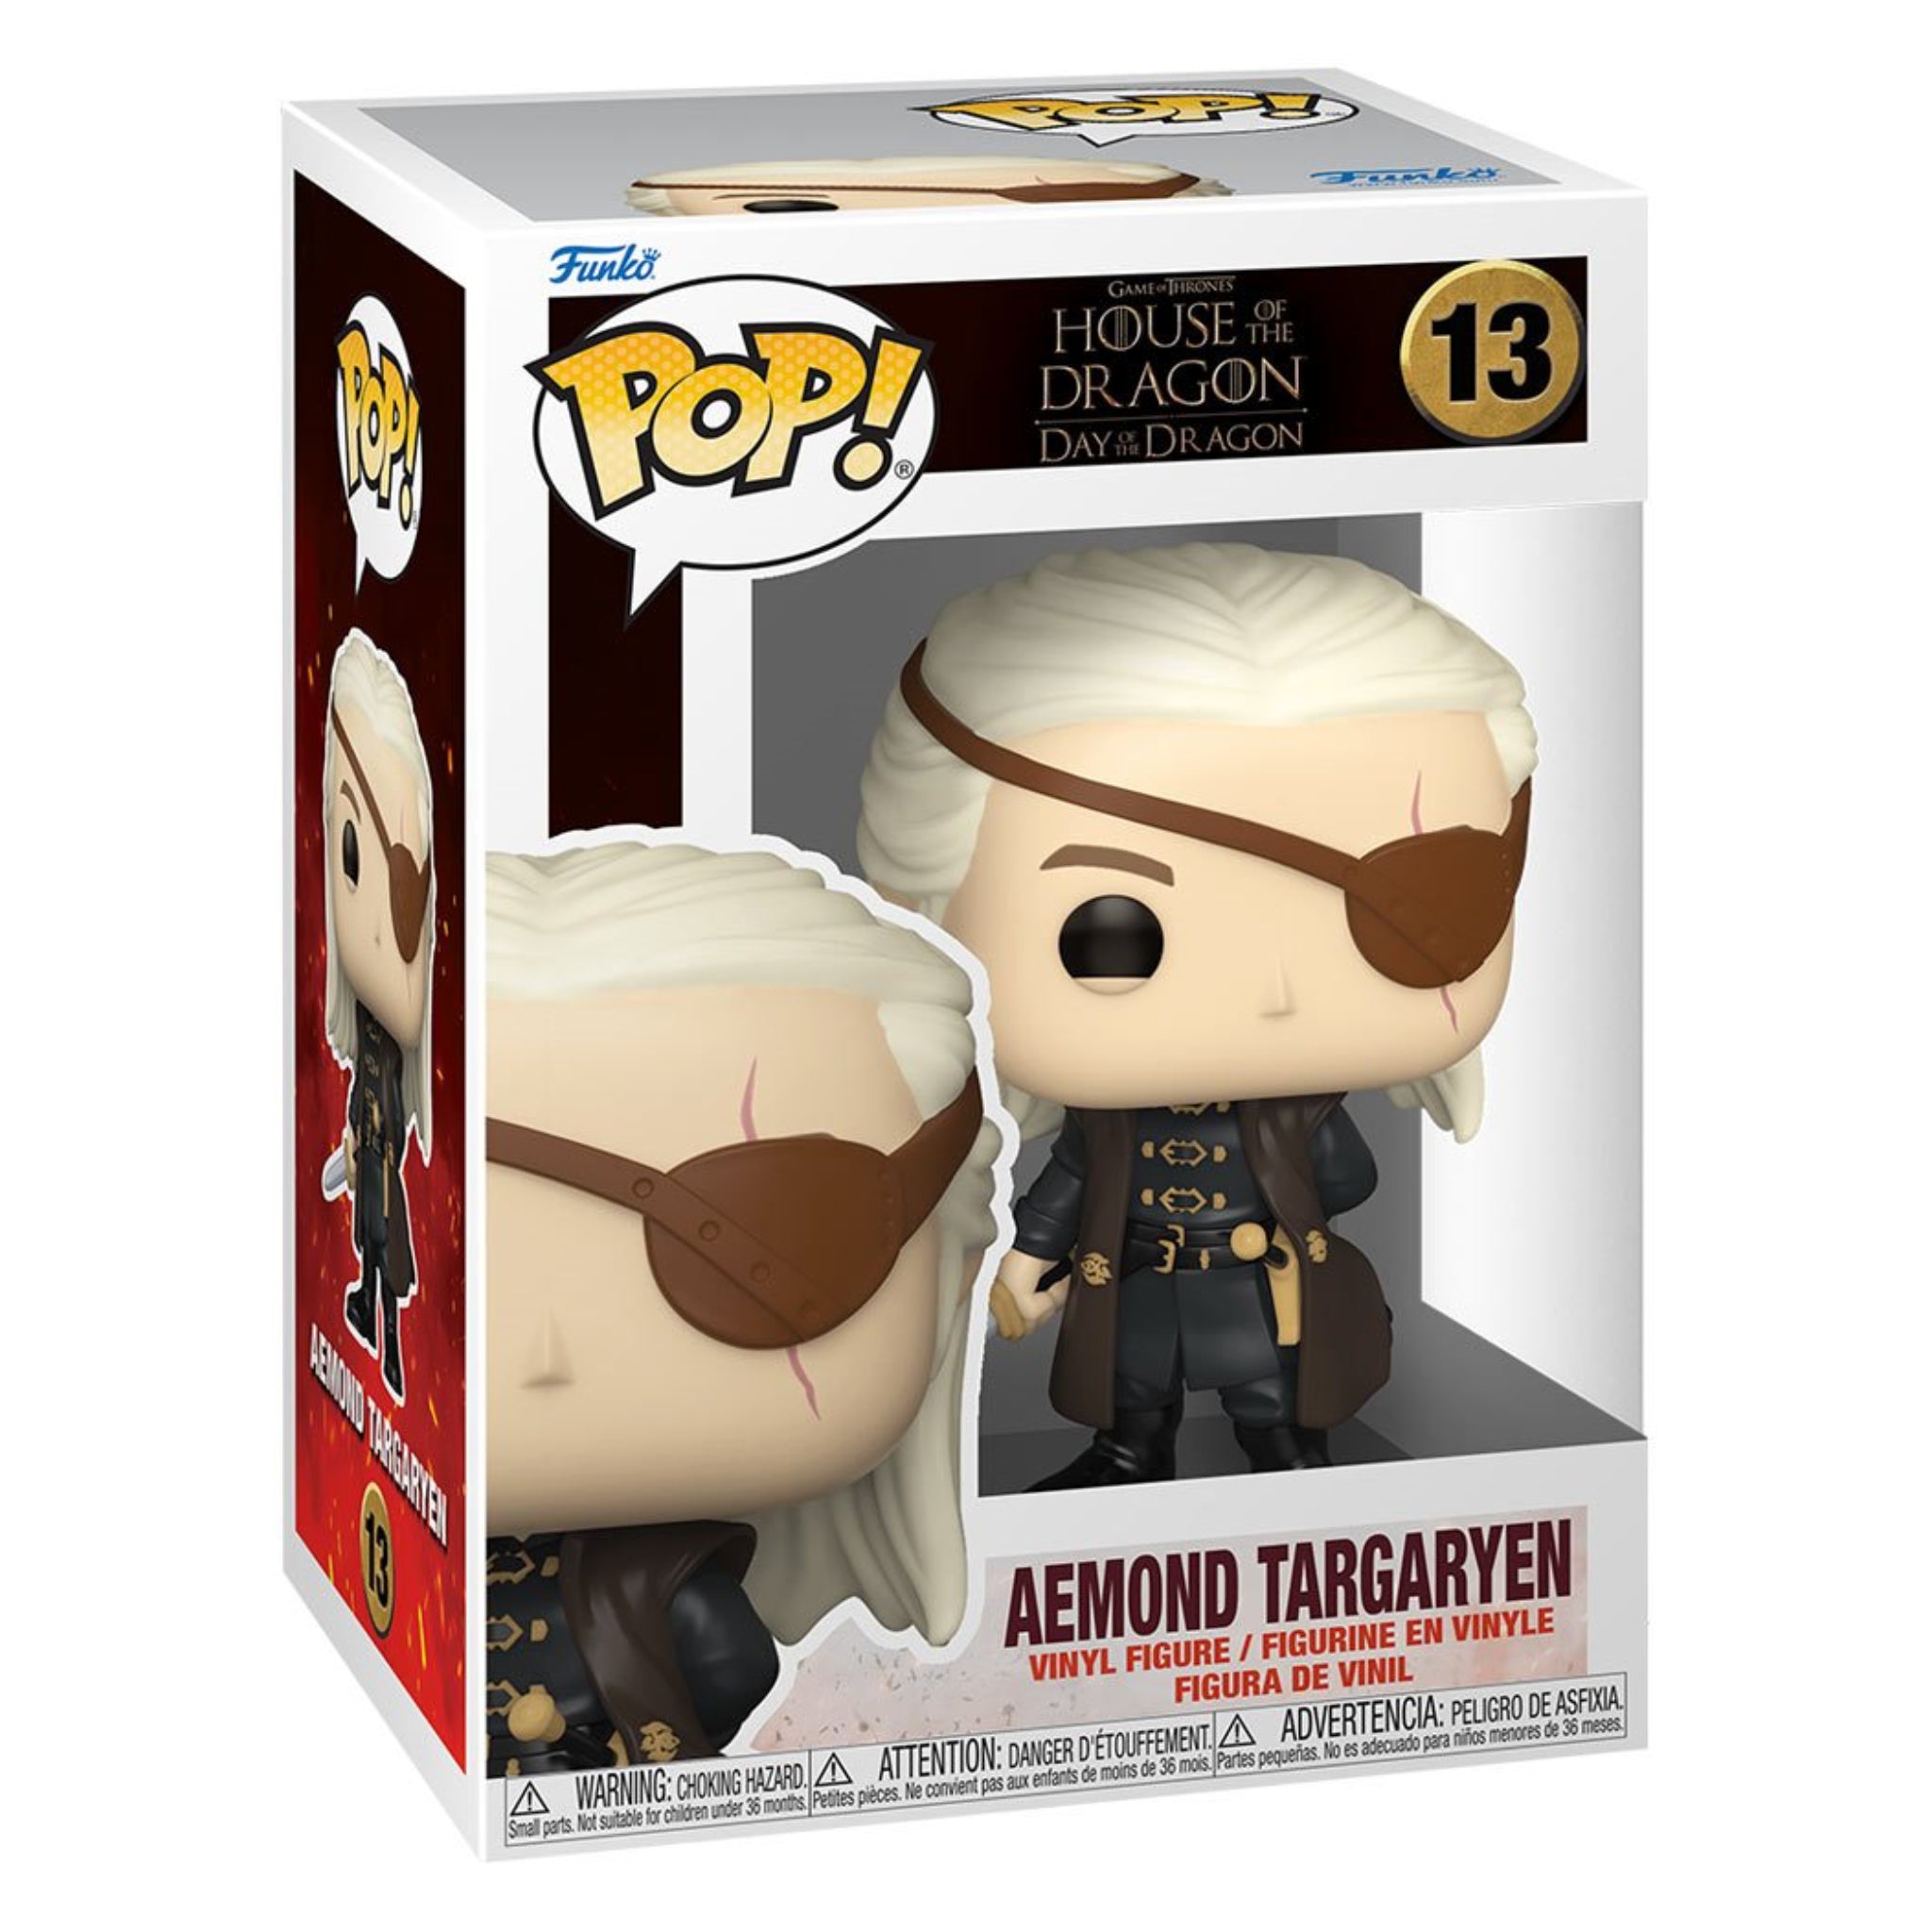 Aemond Targaryen Funko Pop!